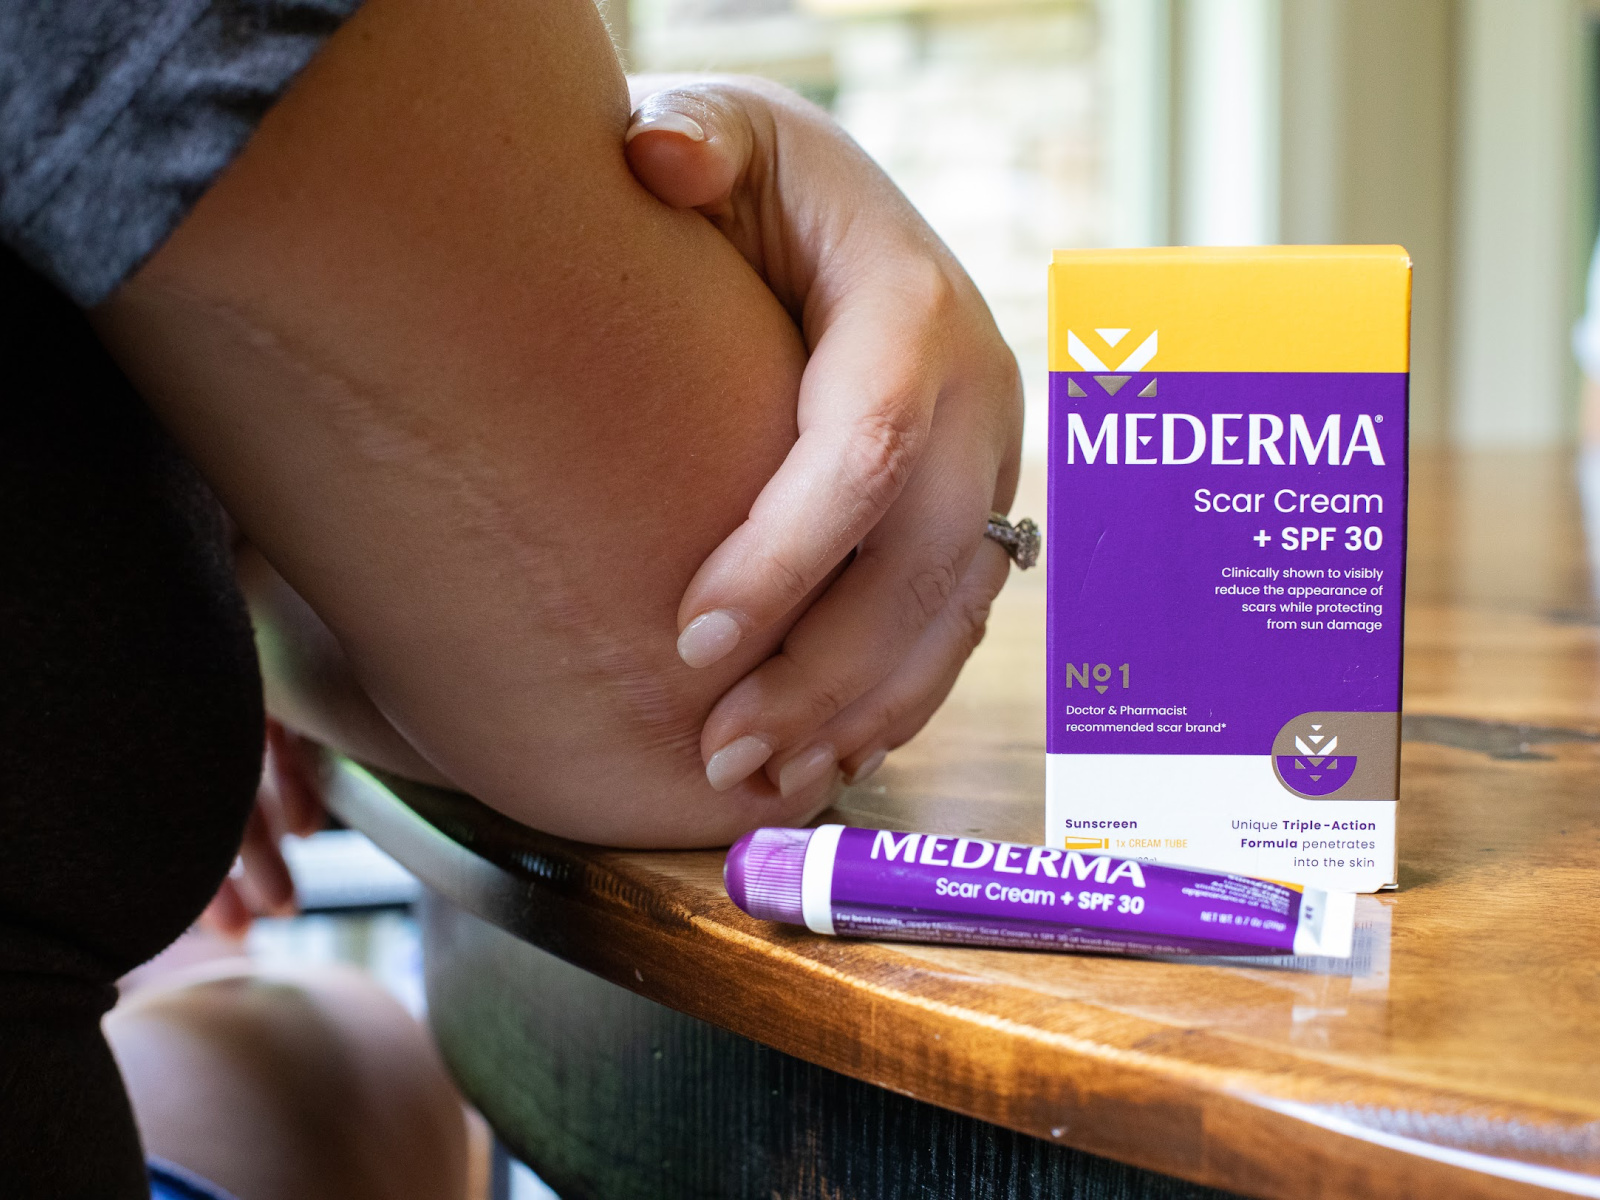 Get Mederma Products As Low As $1.99 At Kroger (Regular Price $17.99)